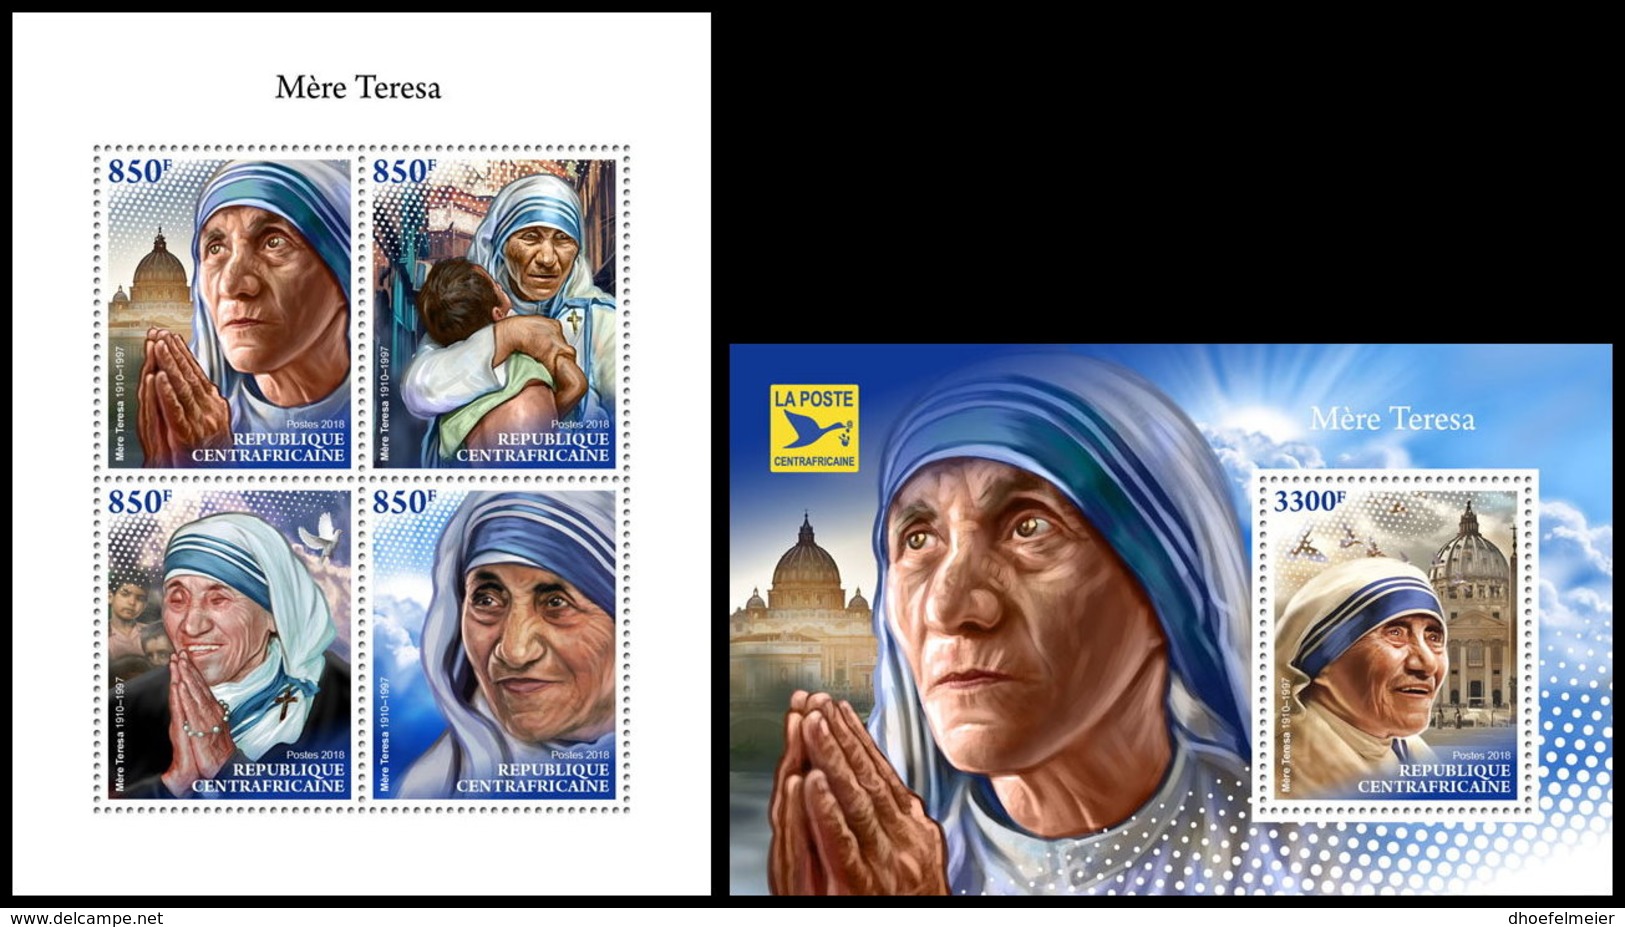 CENTRAL AFRICA 2018 **MNH Mother Teresa Mutter Teresa Mere Teresa M/S+S/S - OFFICIAL ISSUE - DH1845 - Mère Teresa